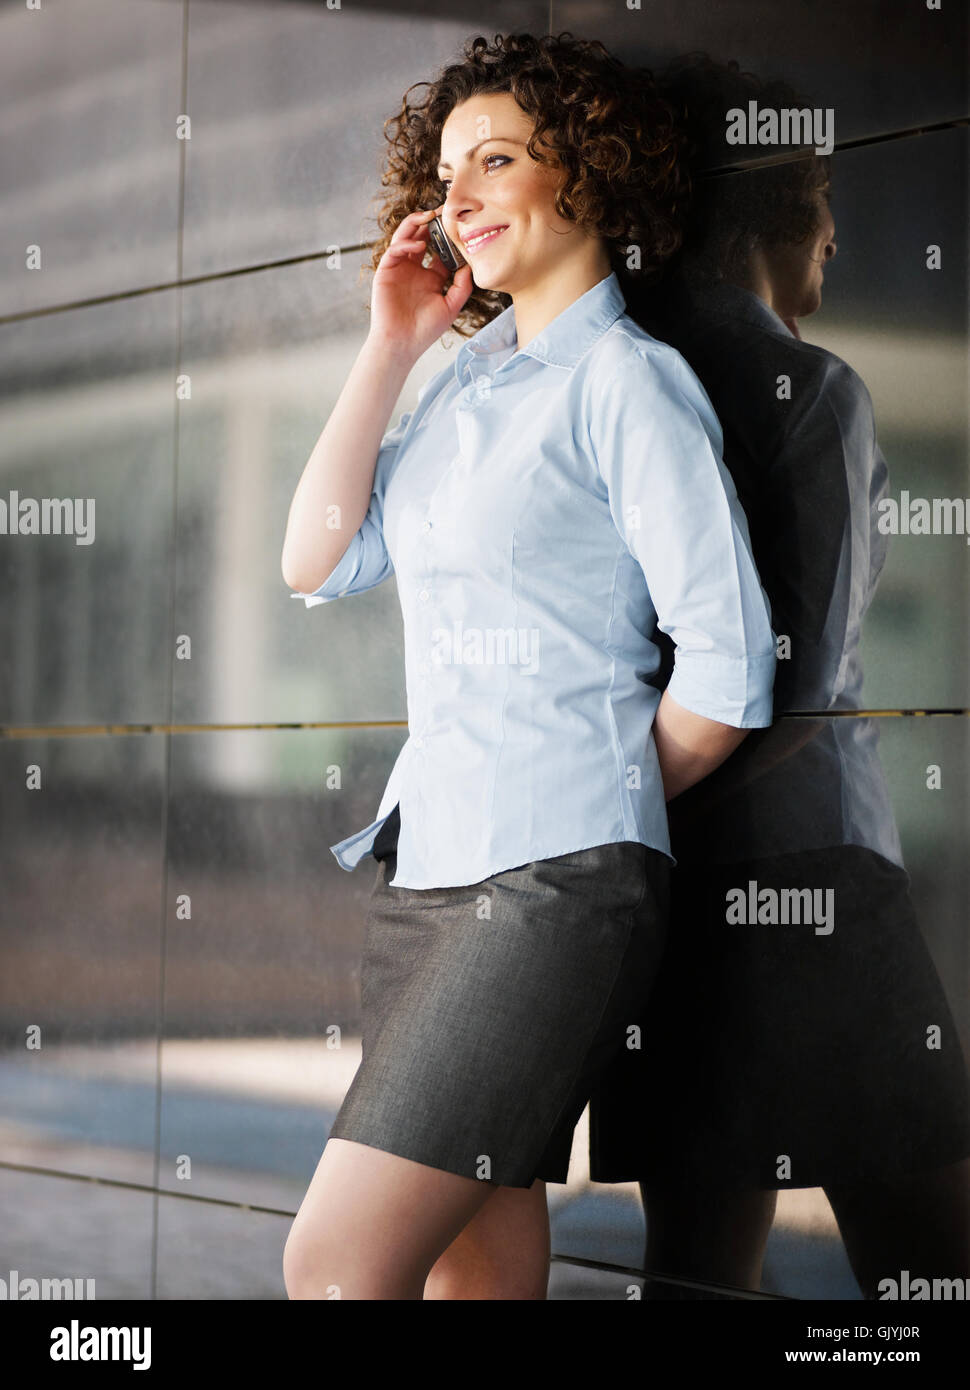 woman telephone phone Stock Photo